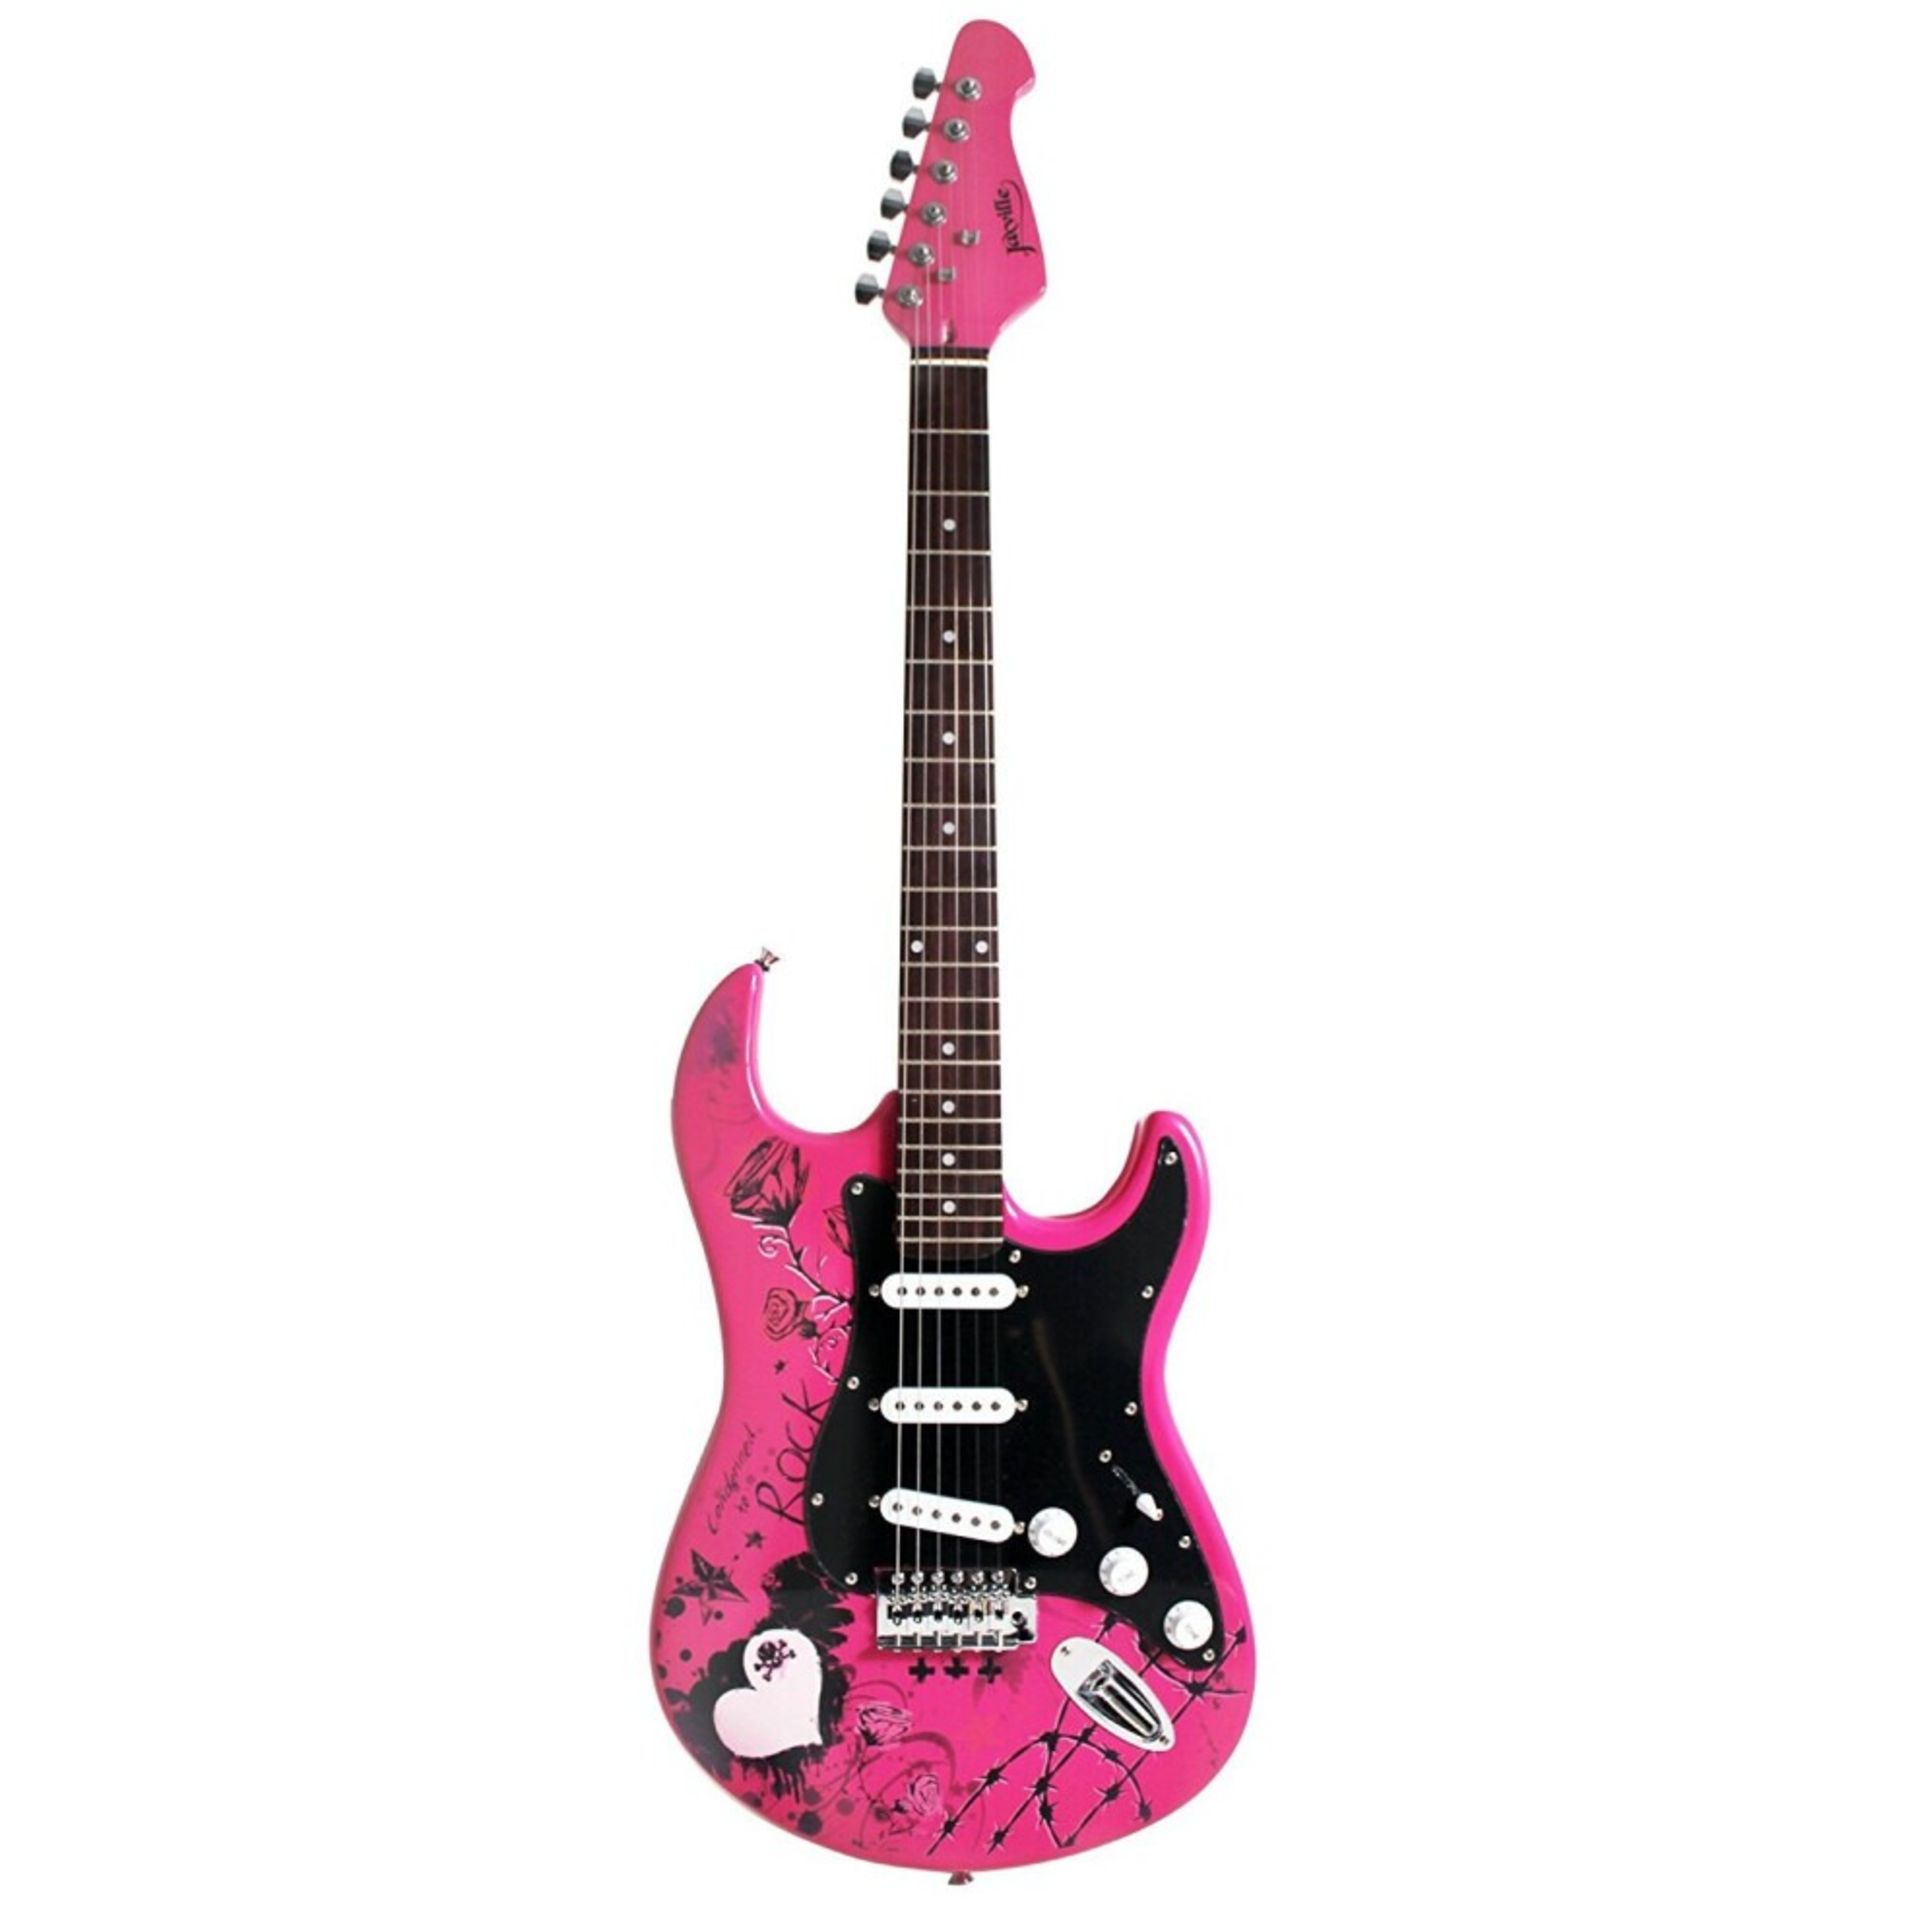 Jaxville - Pink Punk St Style - Electric Guitar - ER21